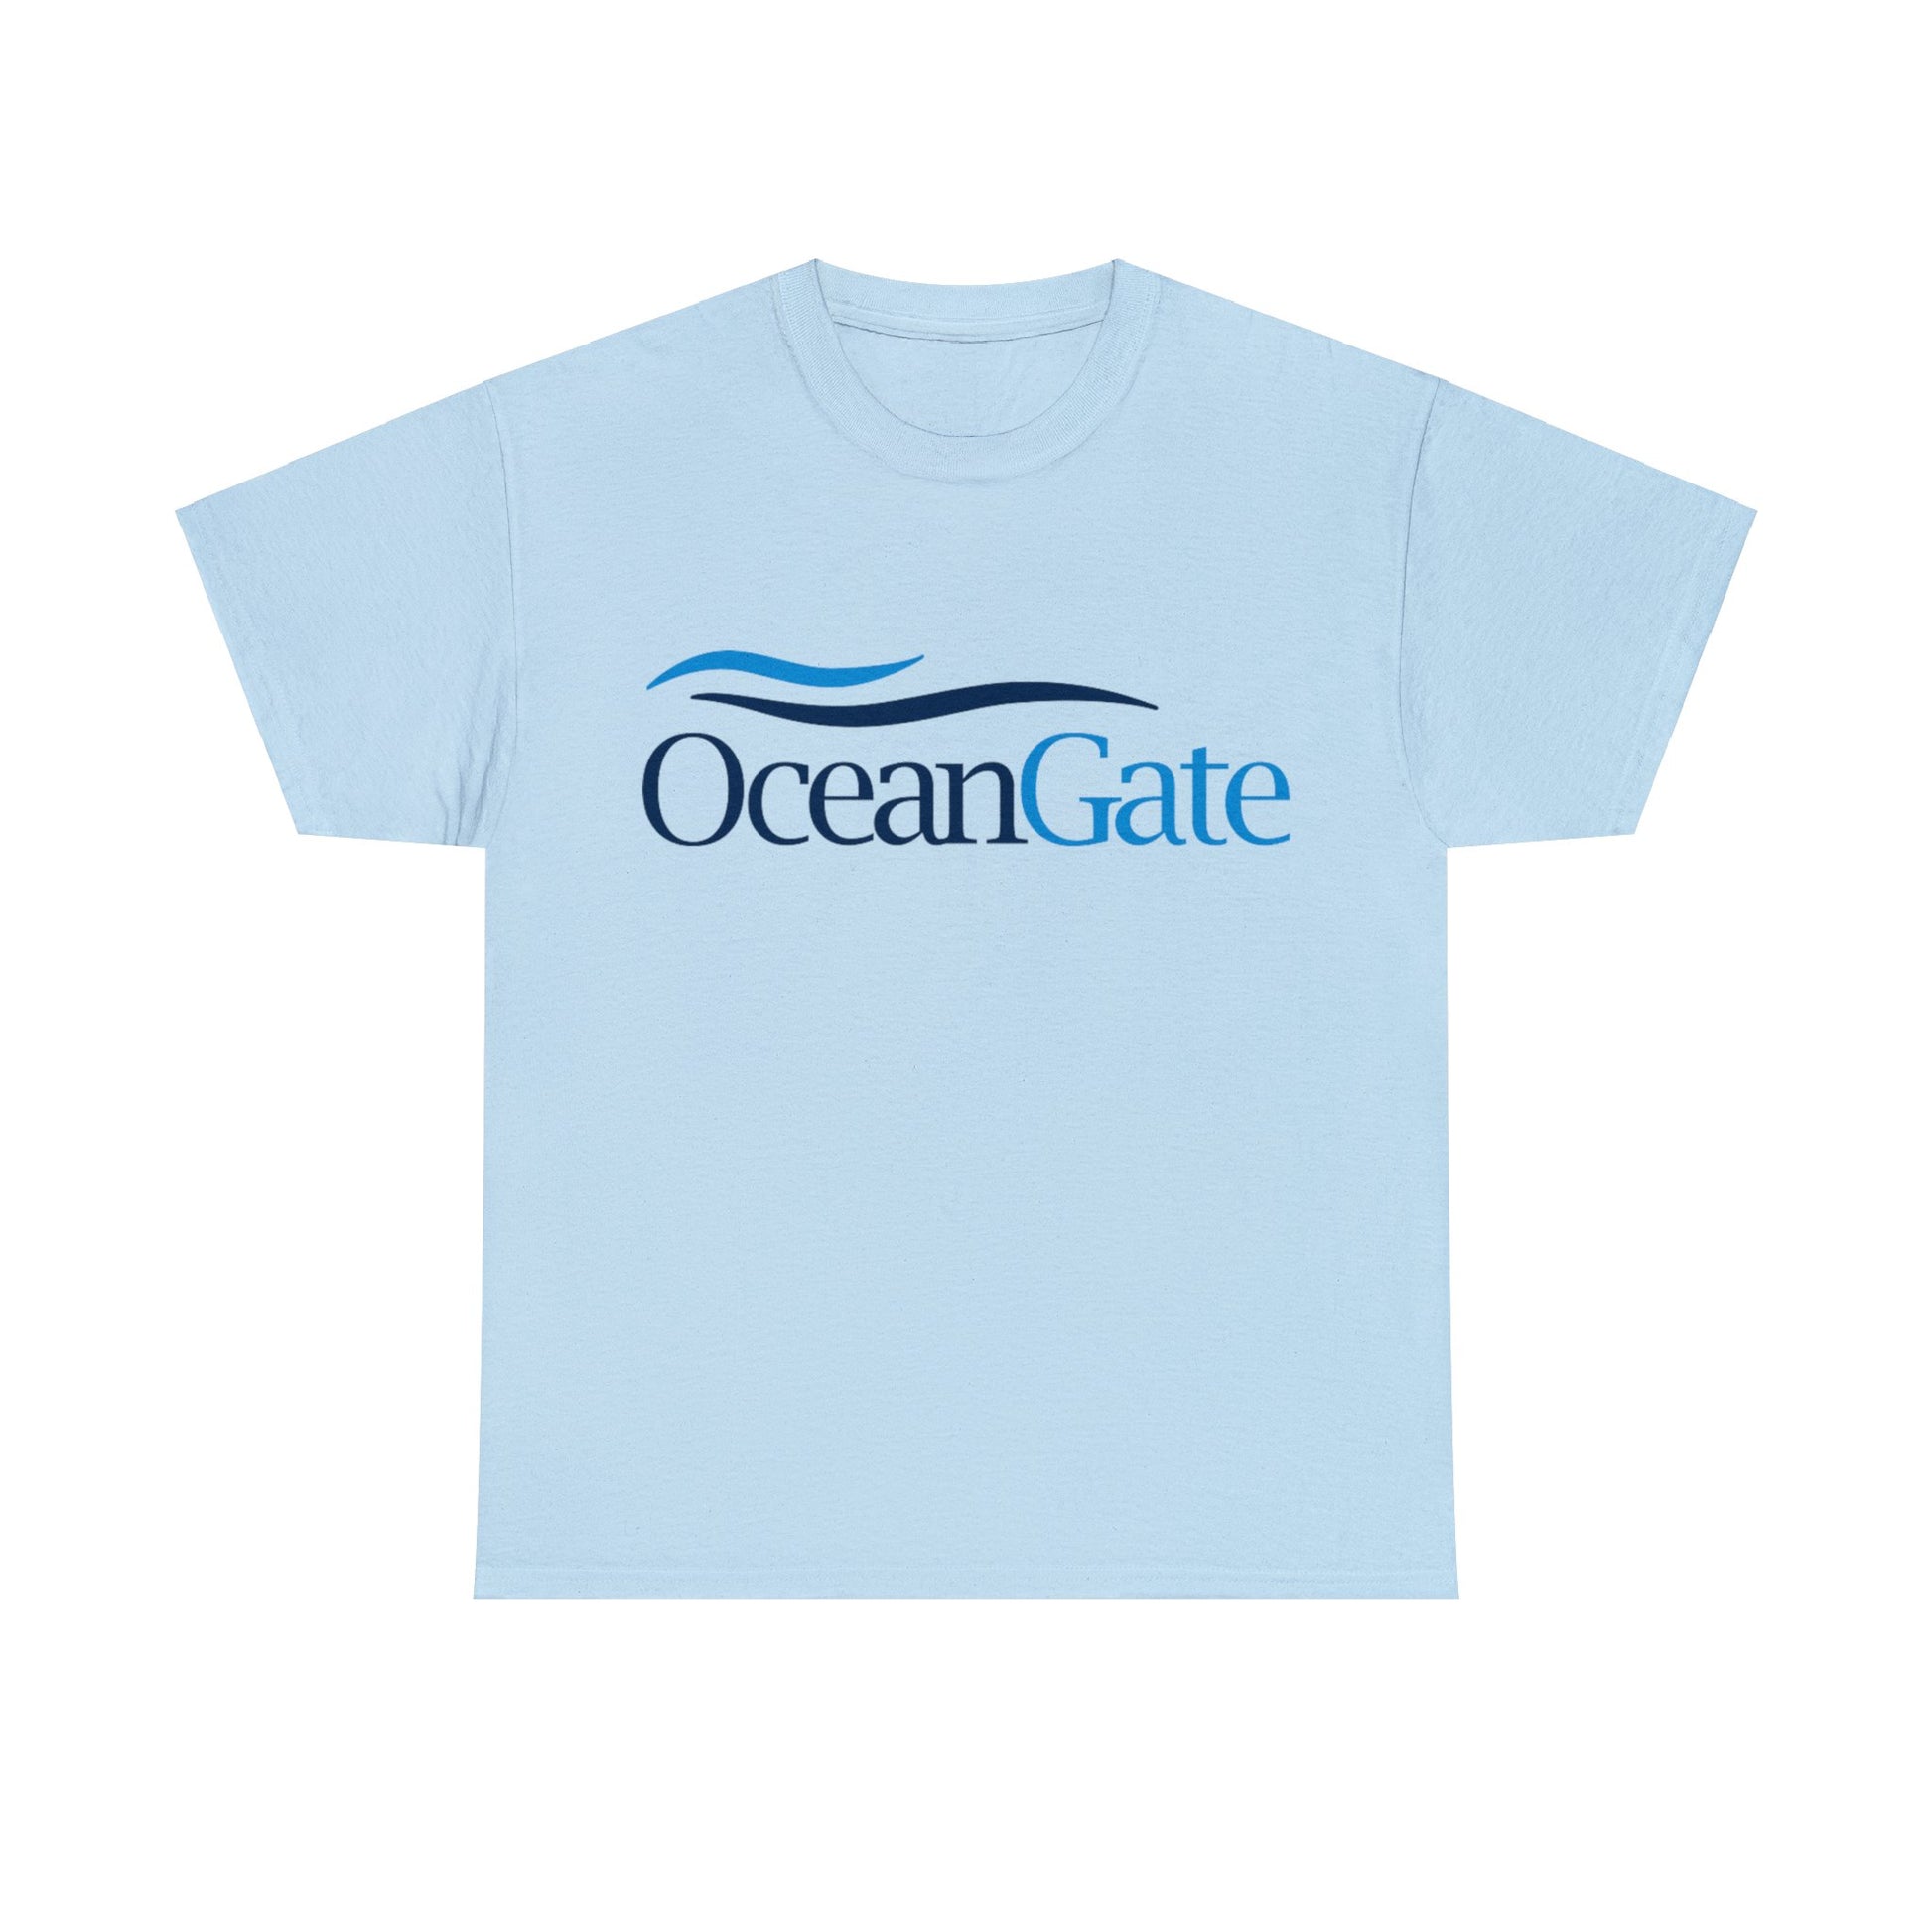 OceanGate Tee Light Blue